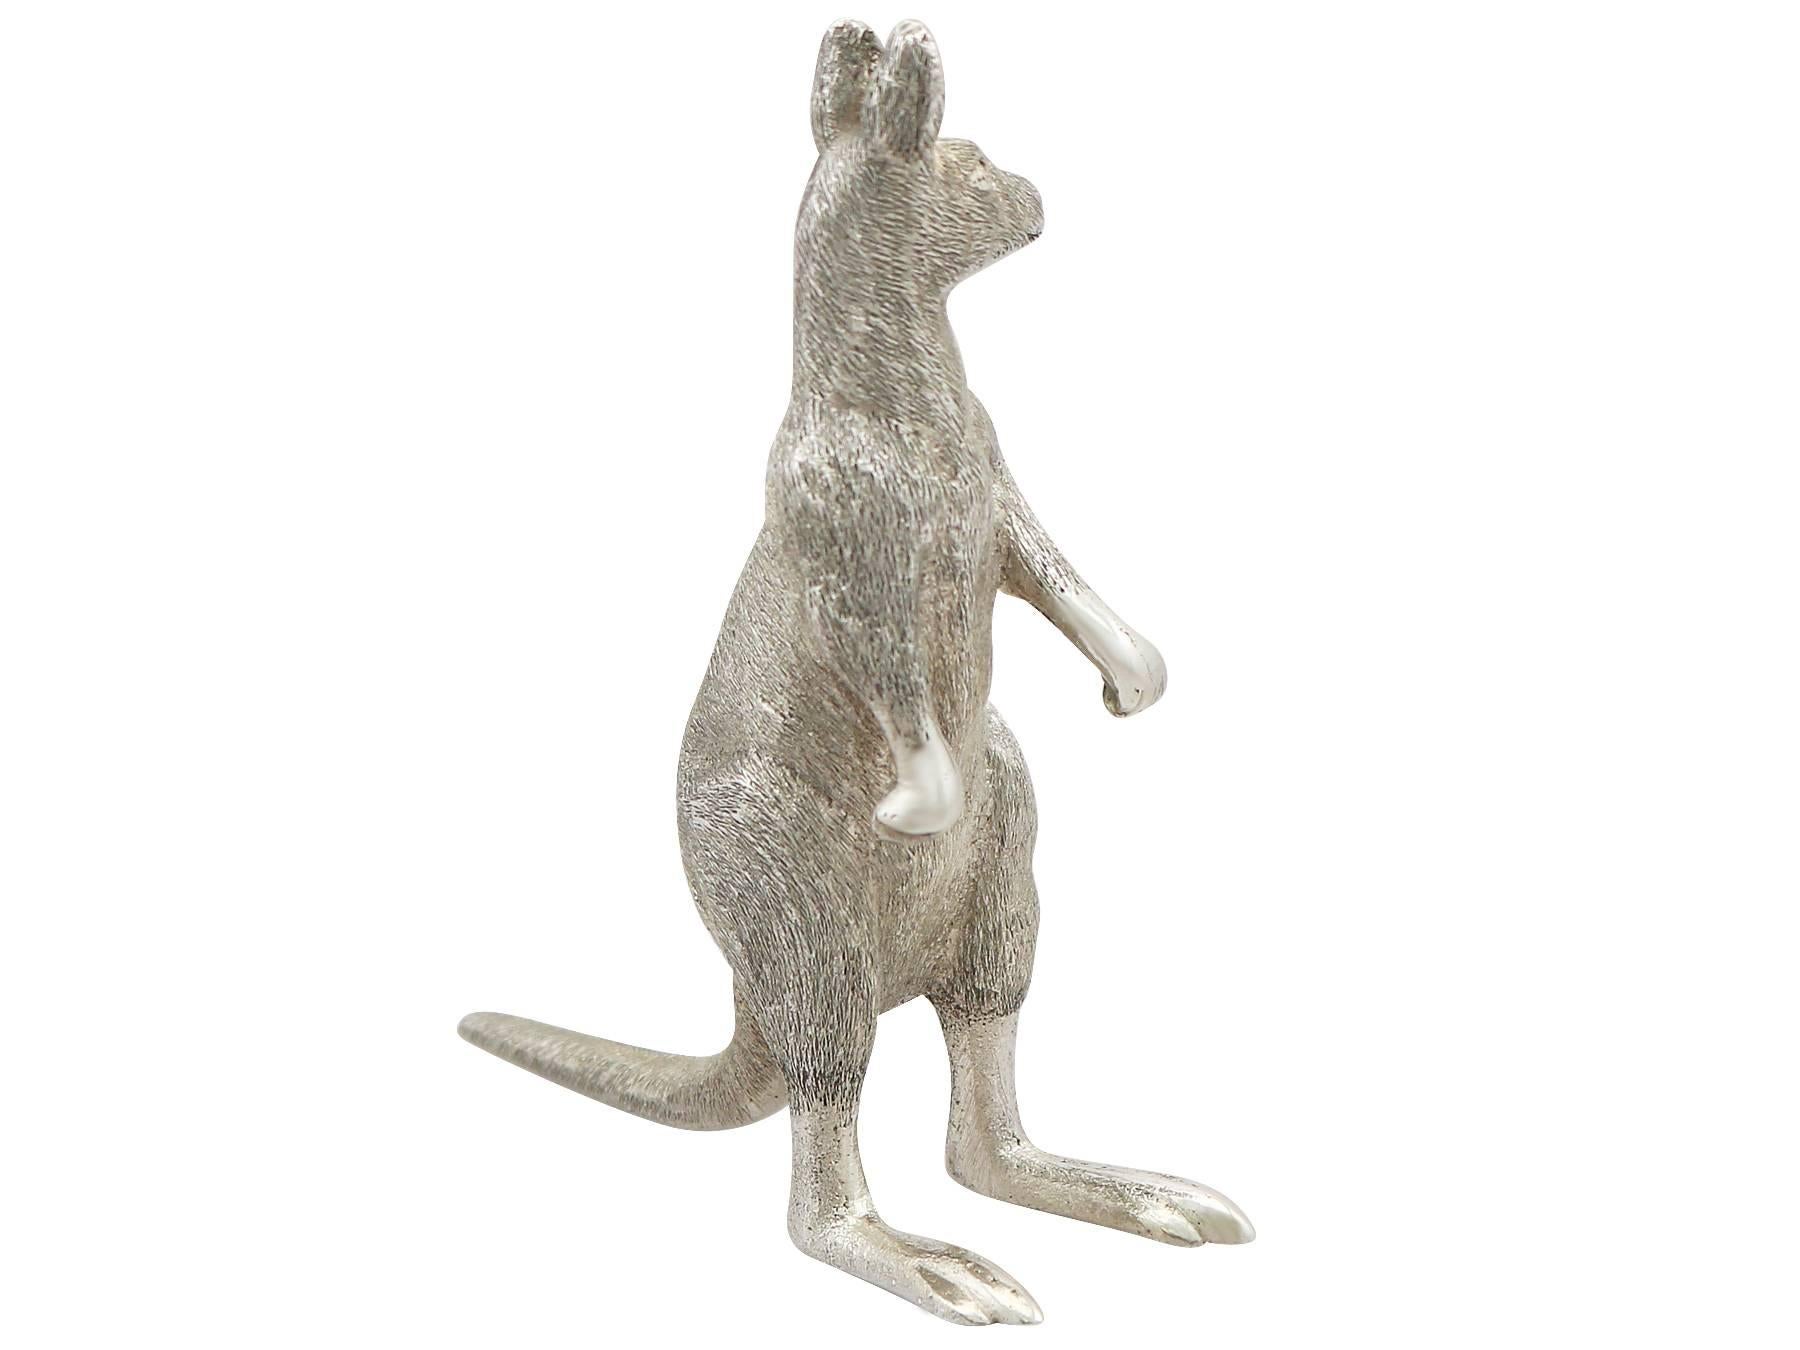 Australian 1900s Sterling Silver Model of a Kangaroo